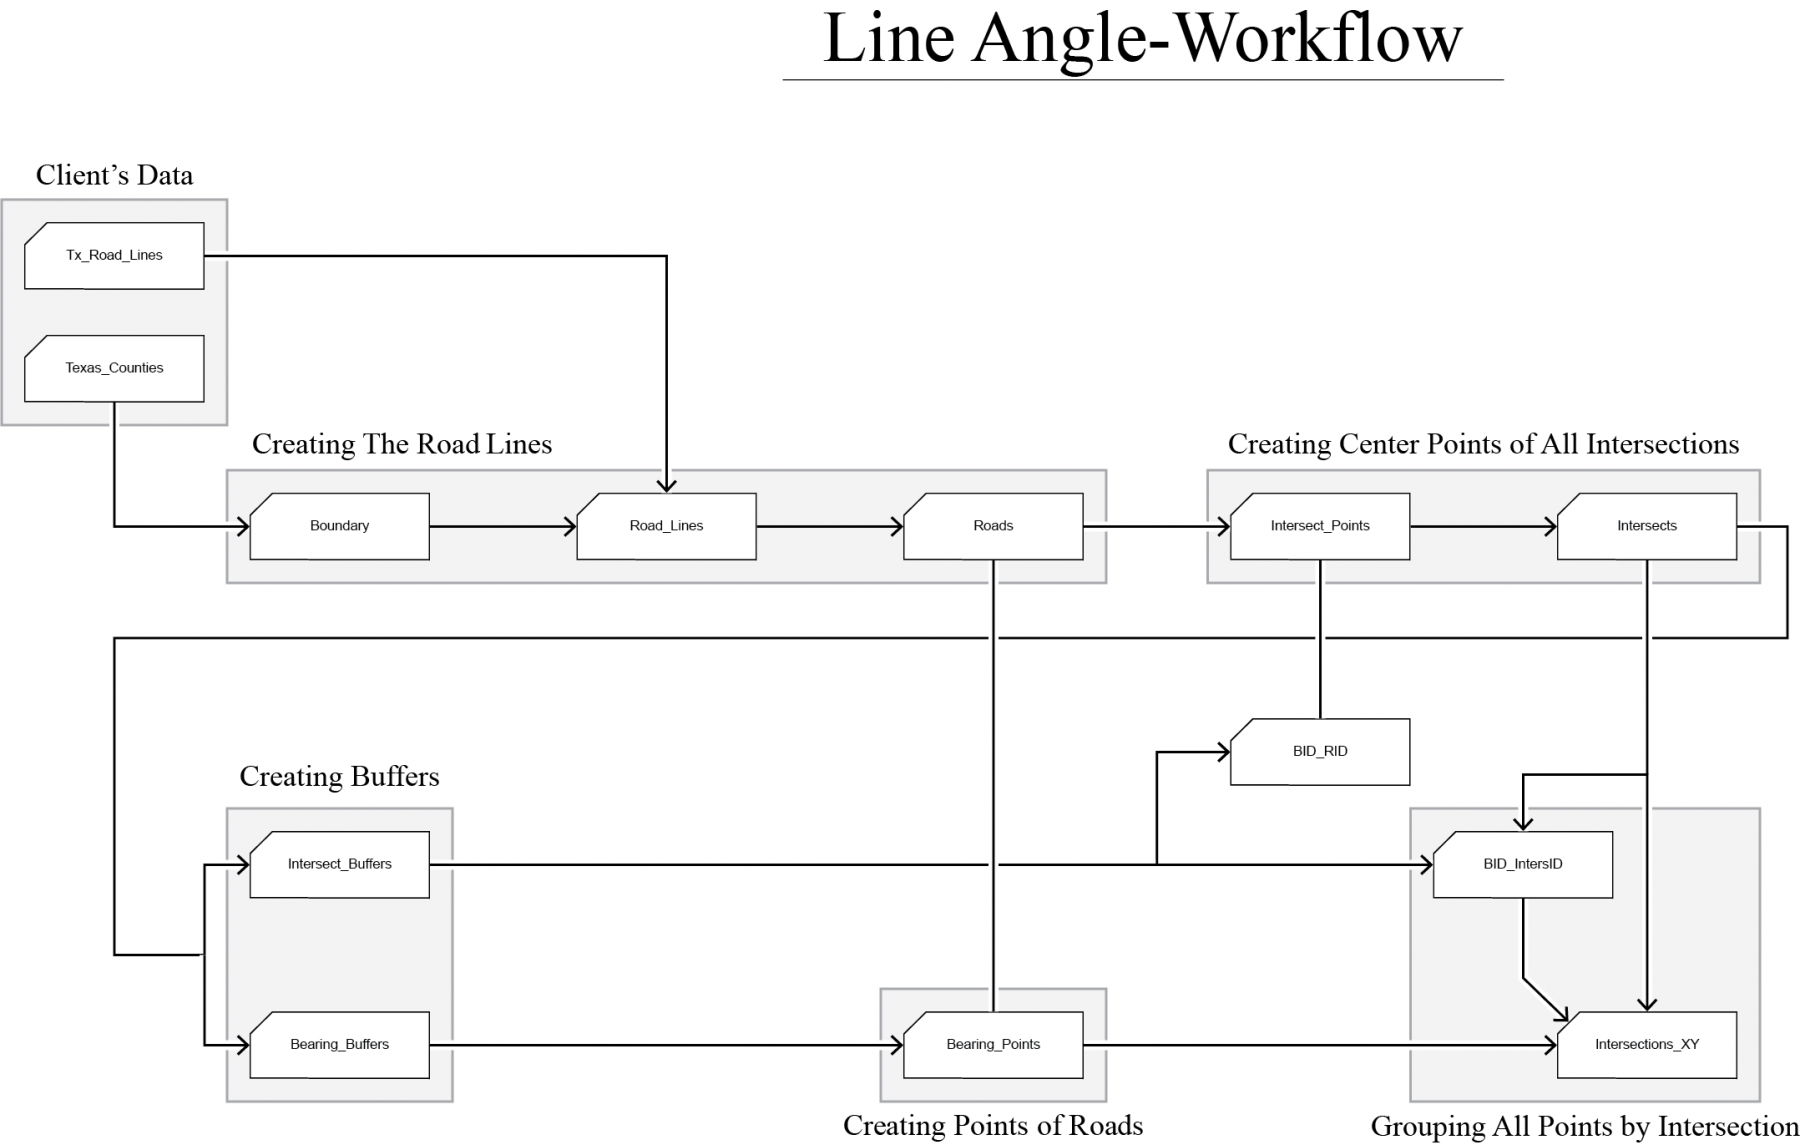 Line-Angle-Workflow